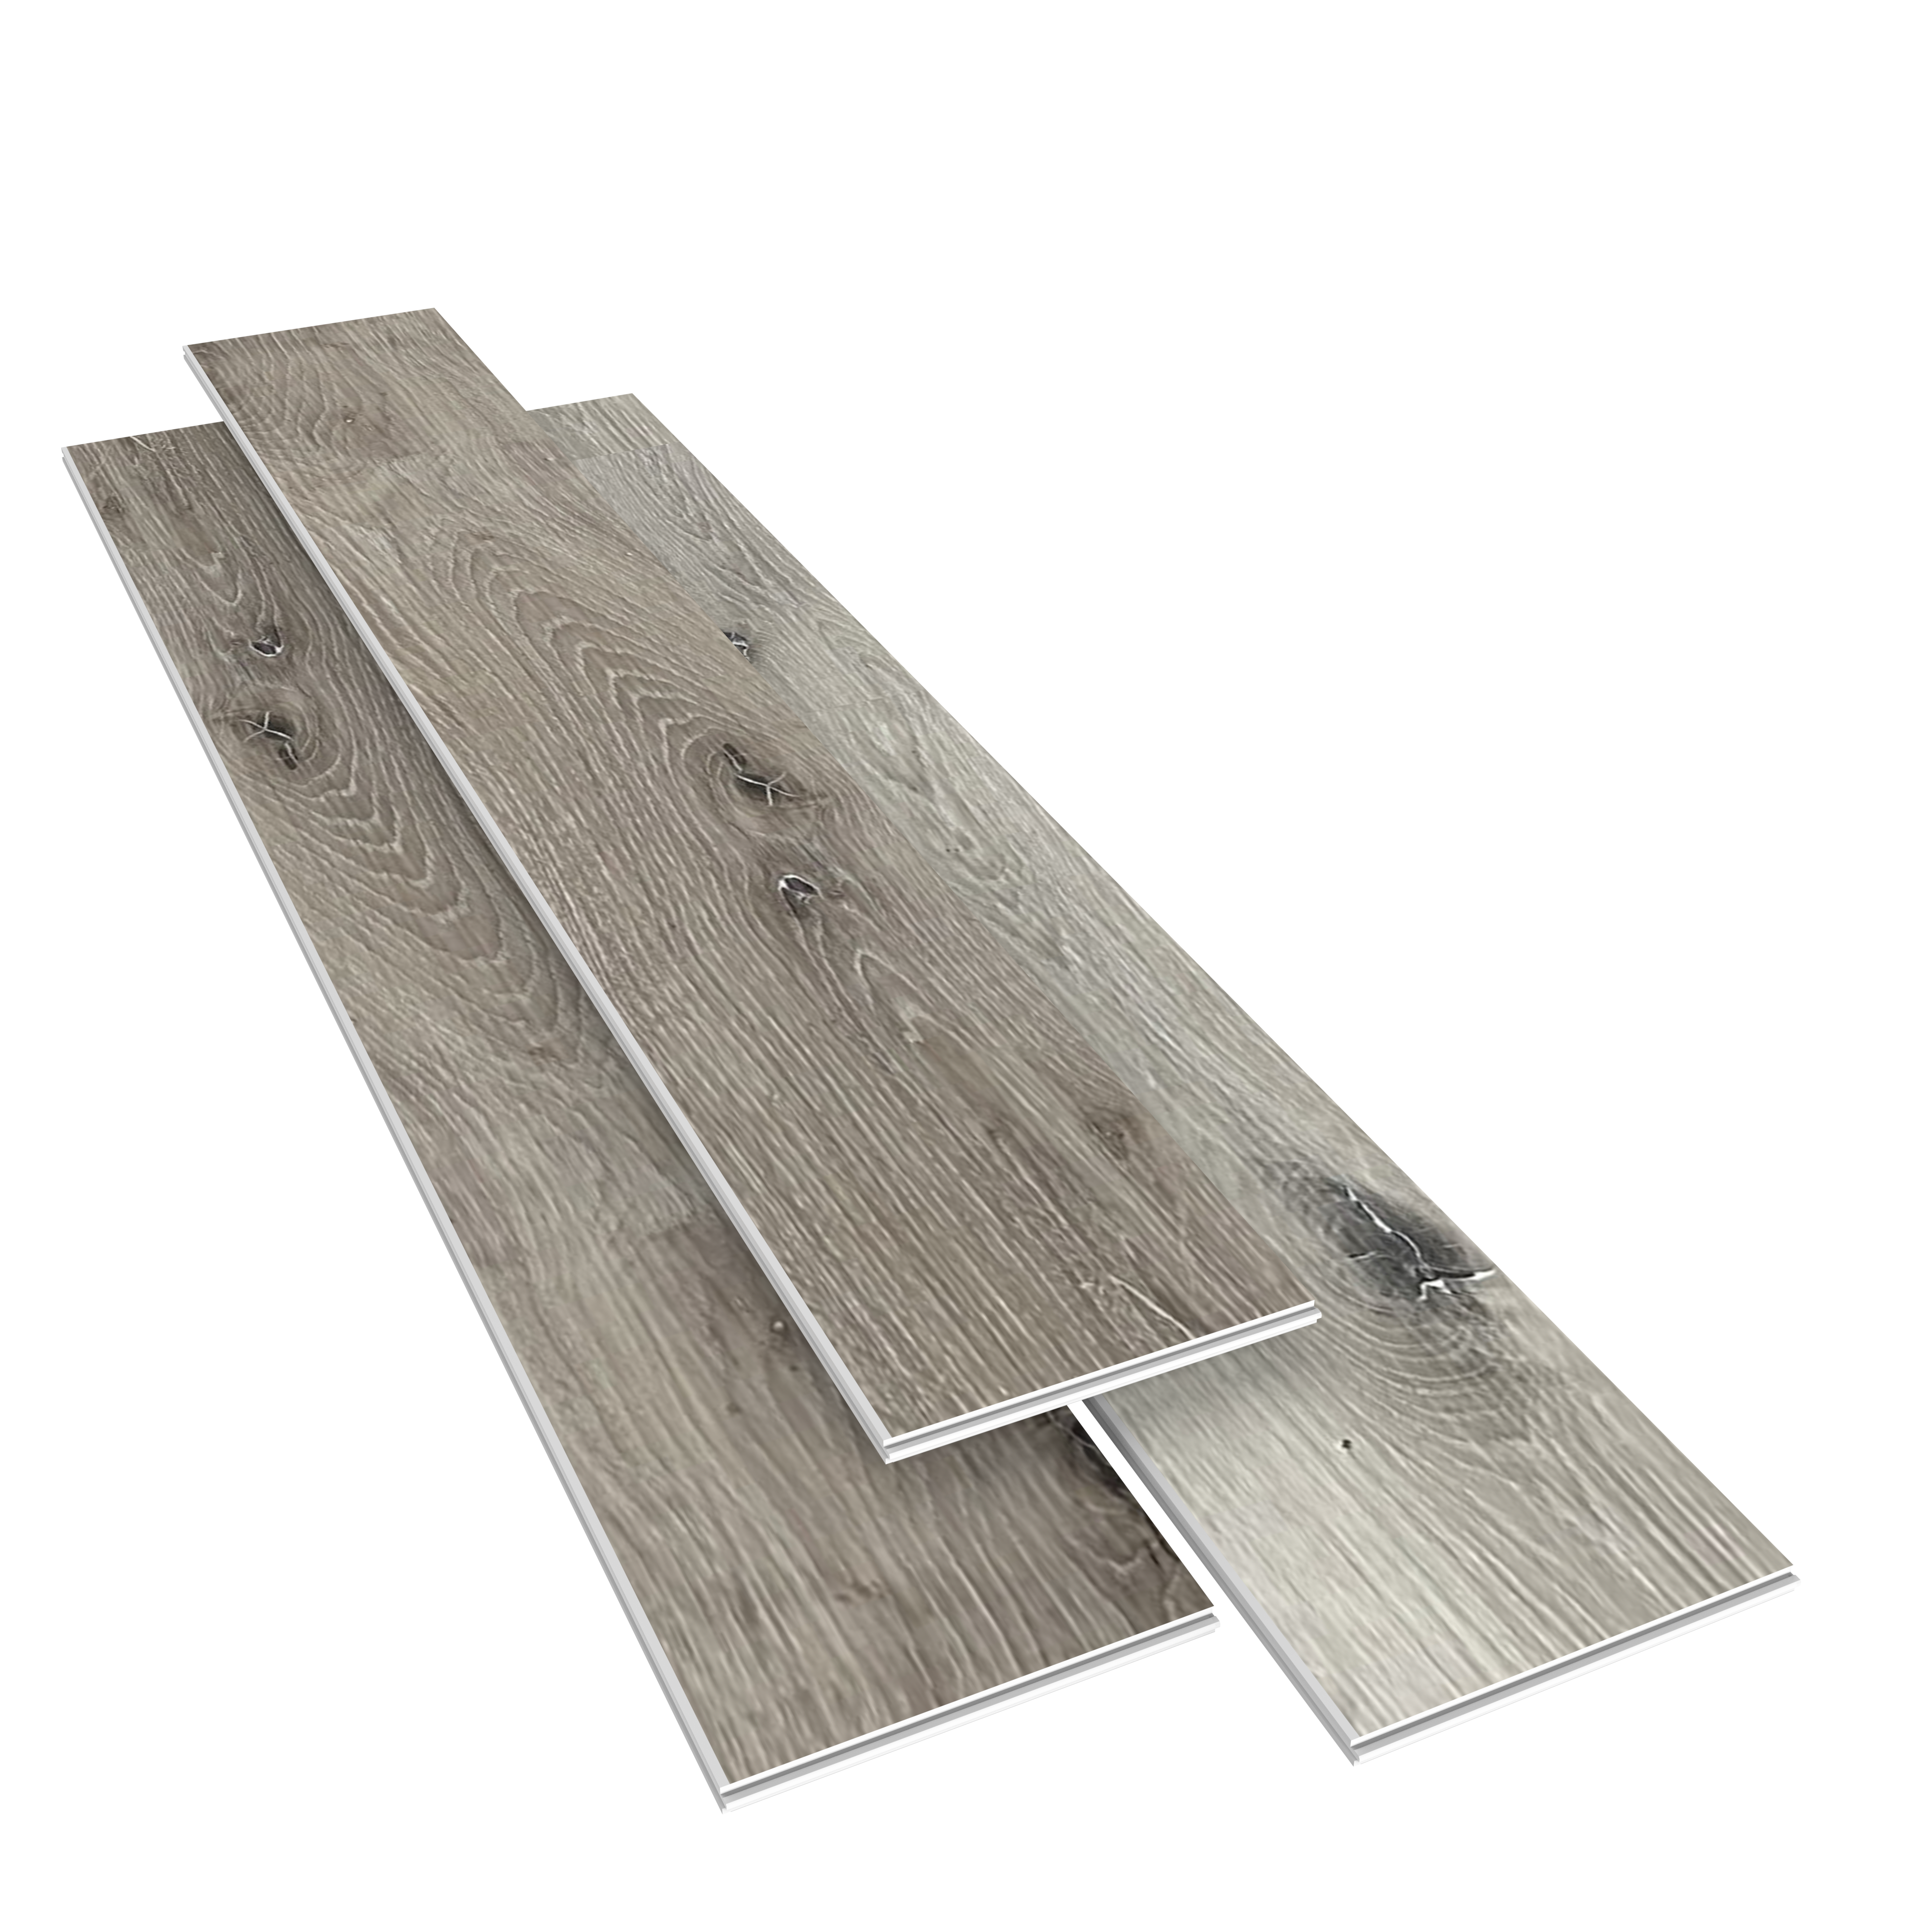 SPC Rigid Core Plank Harbor Flooring, 7" x 48" x 6mm, 22 mil Wear Layer